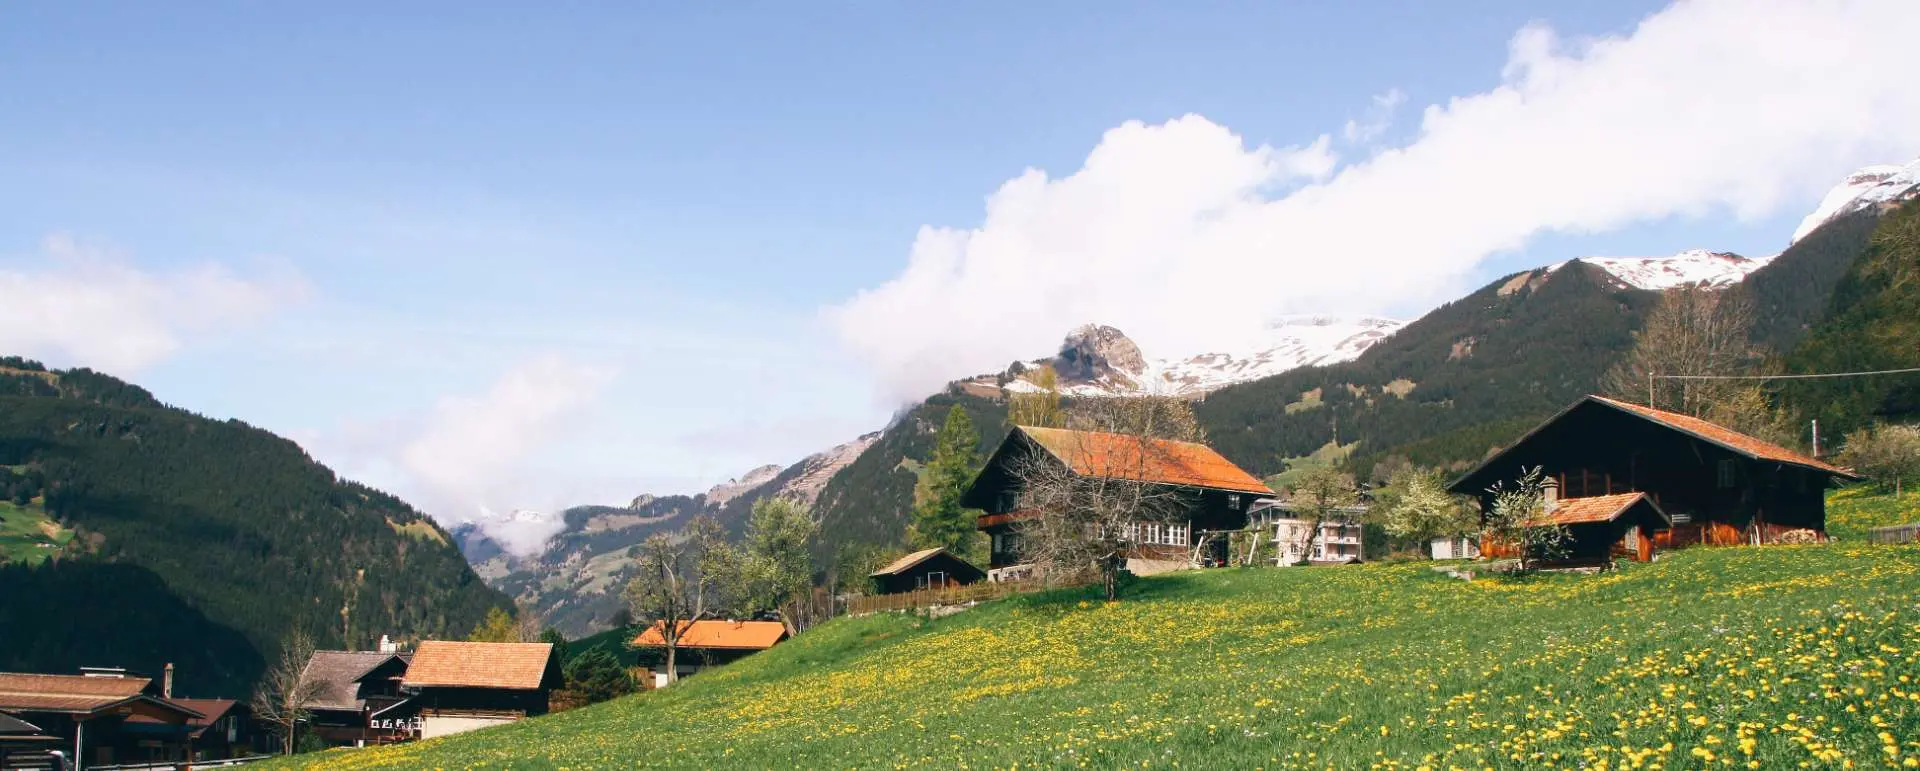 Bernese Highlands - the destination for families